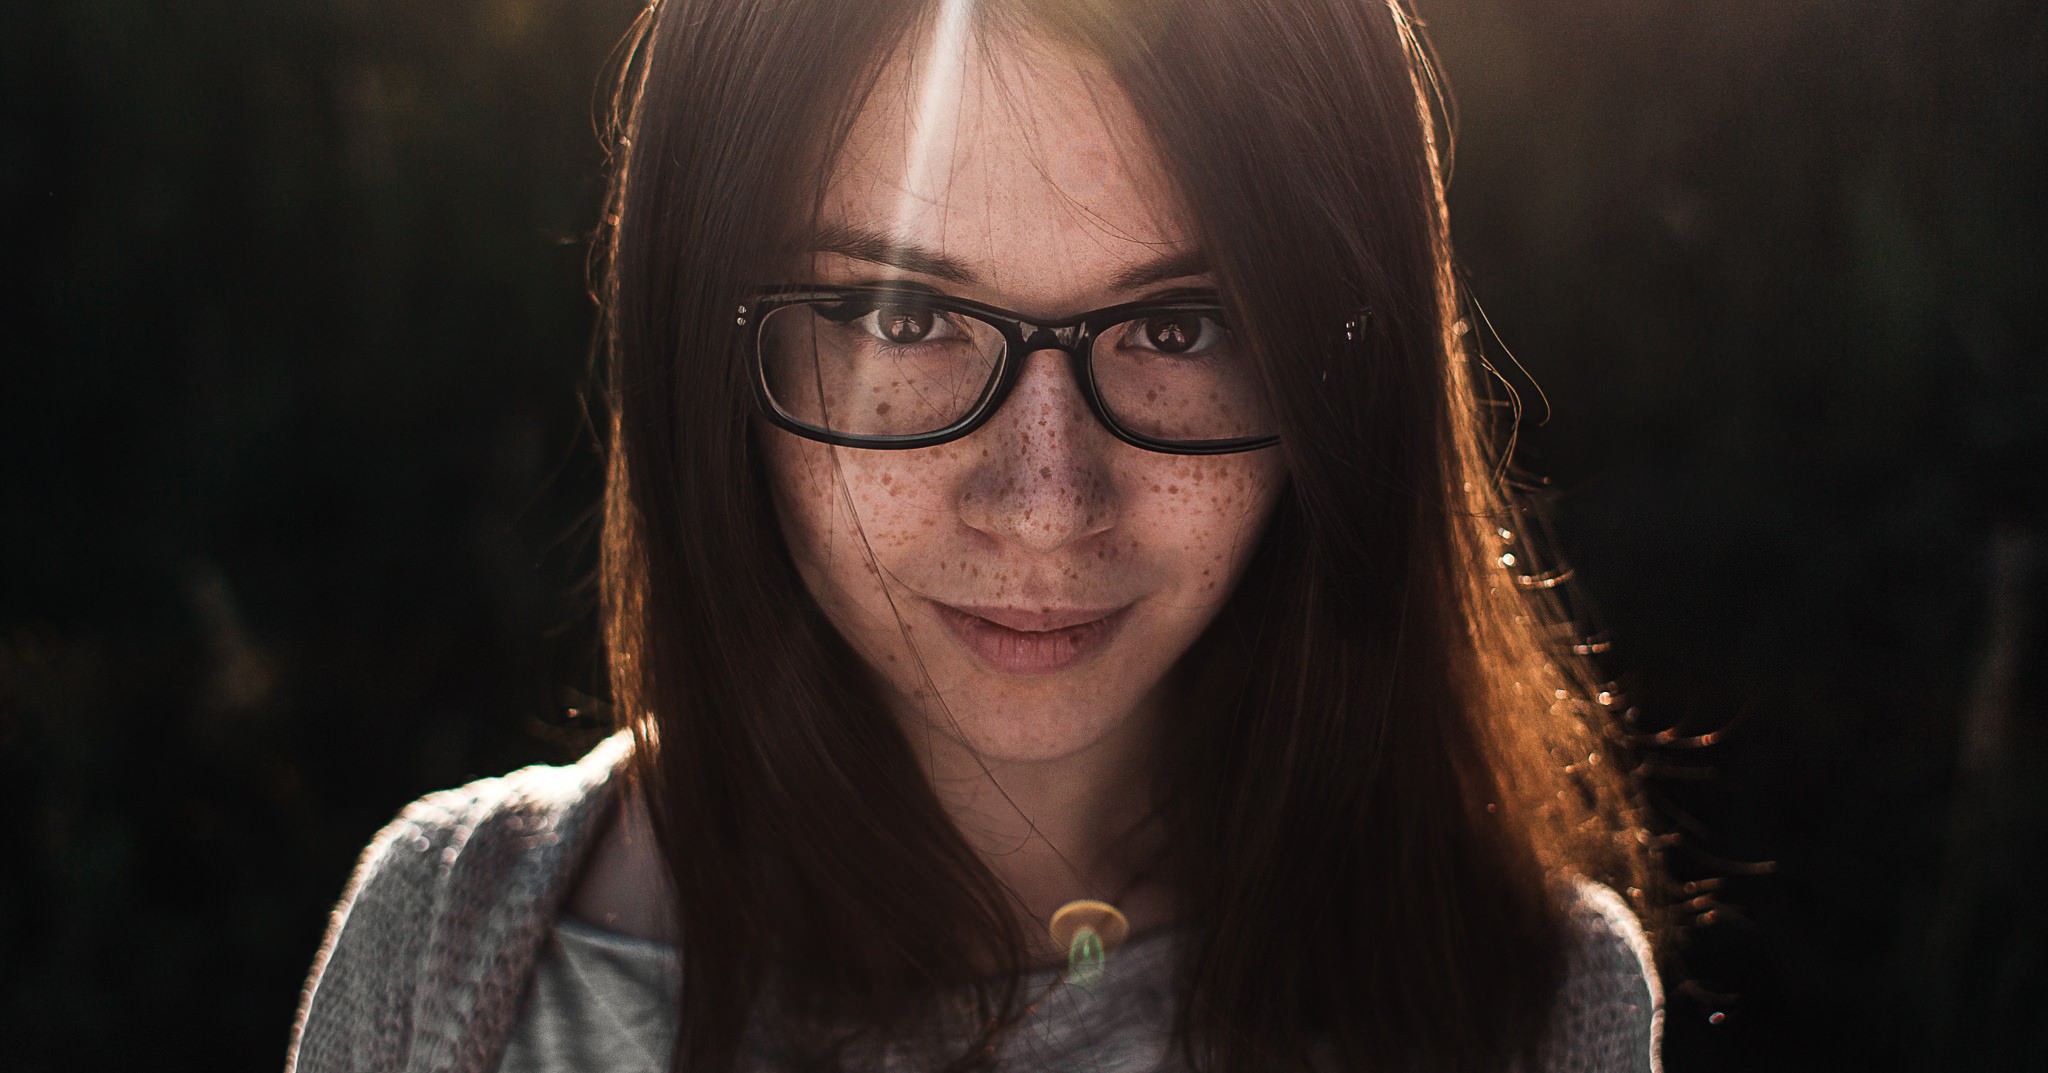 Women Freckles Face Women With Glasses Nerds Long Hair Brunette